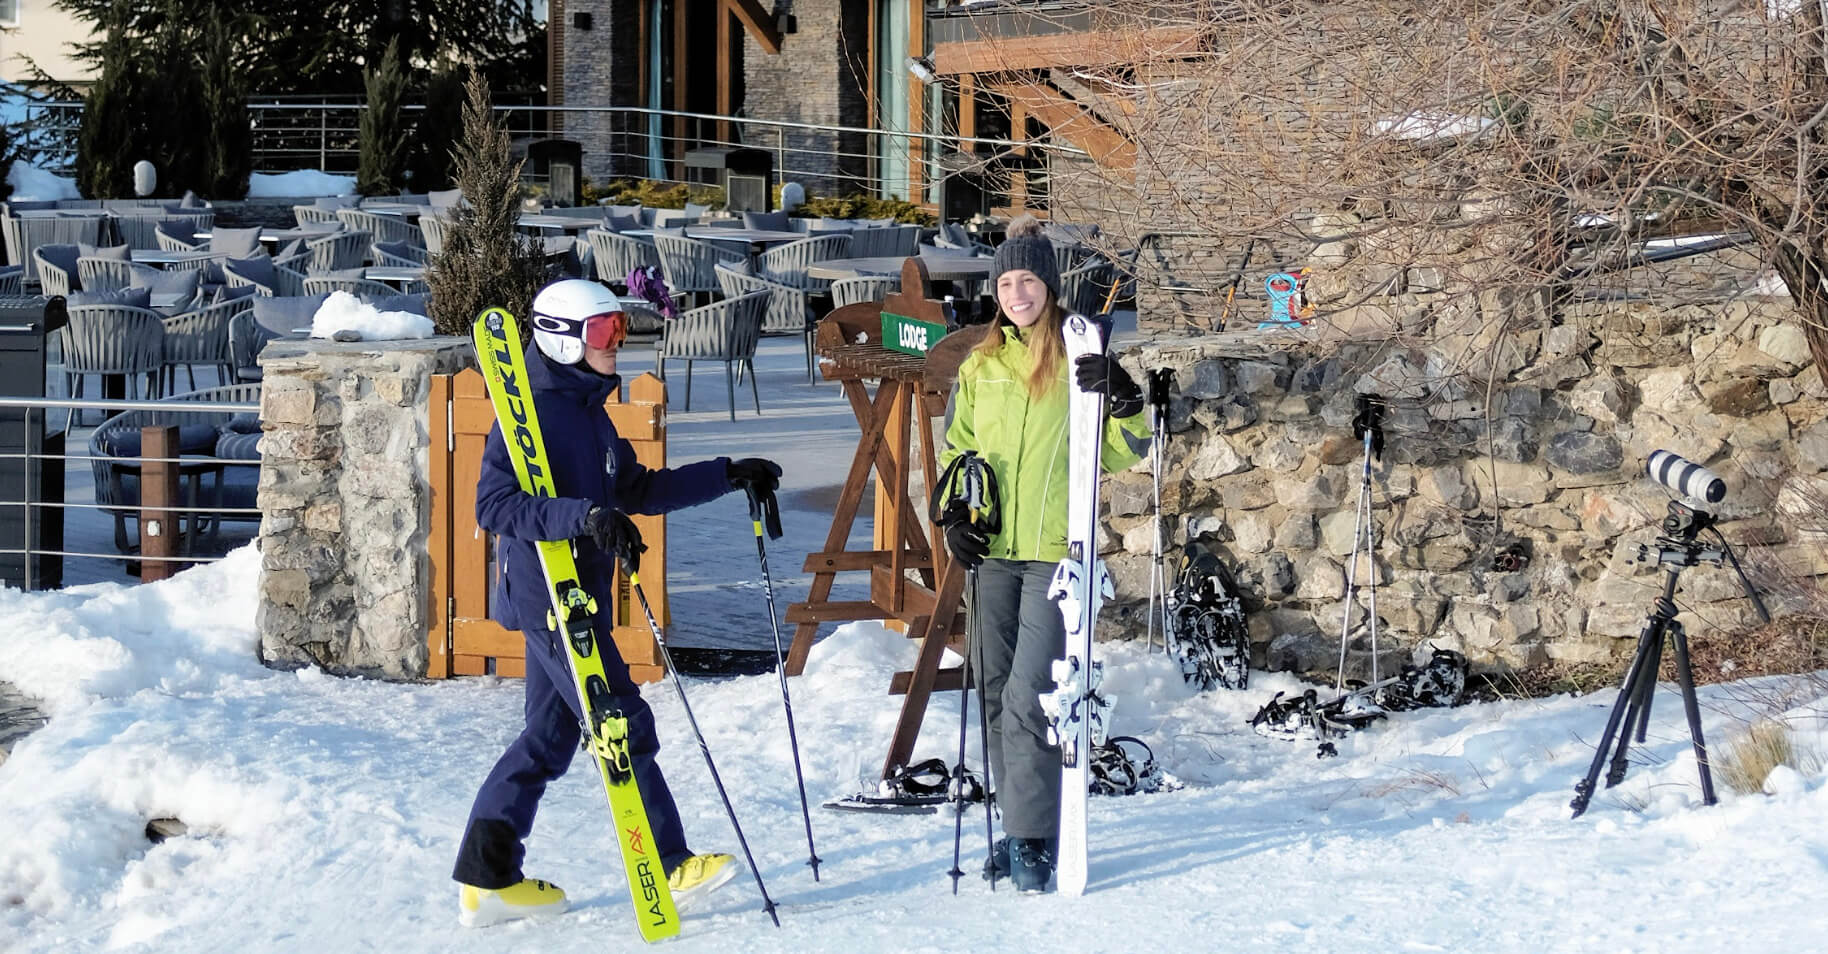 The ski season begins at the stunning Sierra Nevada